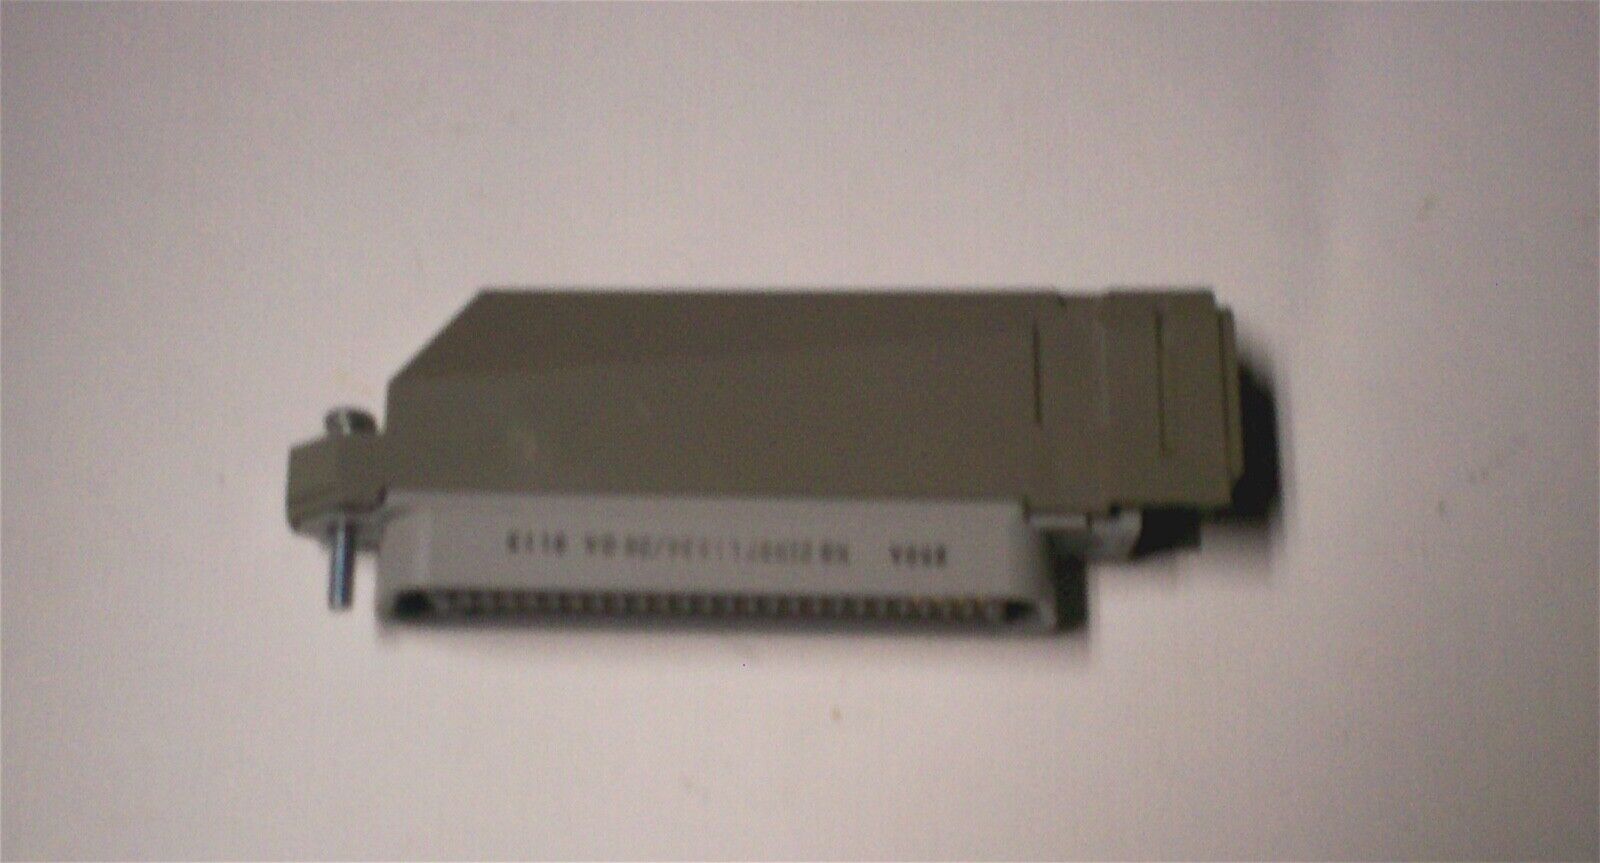 50 Pin 2 Pair RJ21 Telco Amphenol/, KS 21997L2 male connector, with modular jack